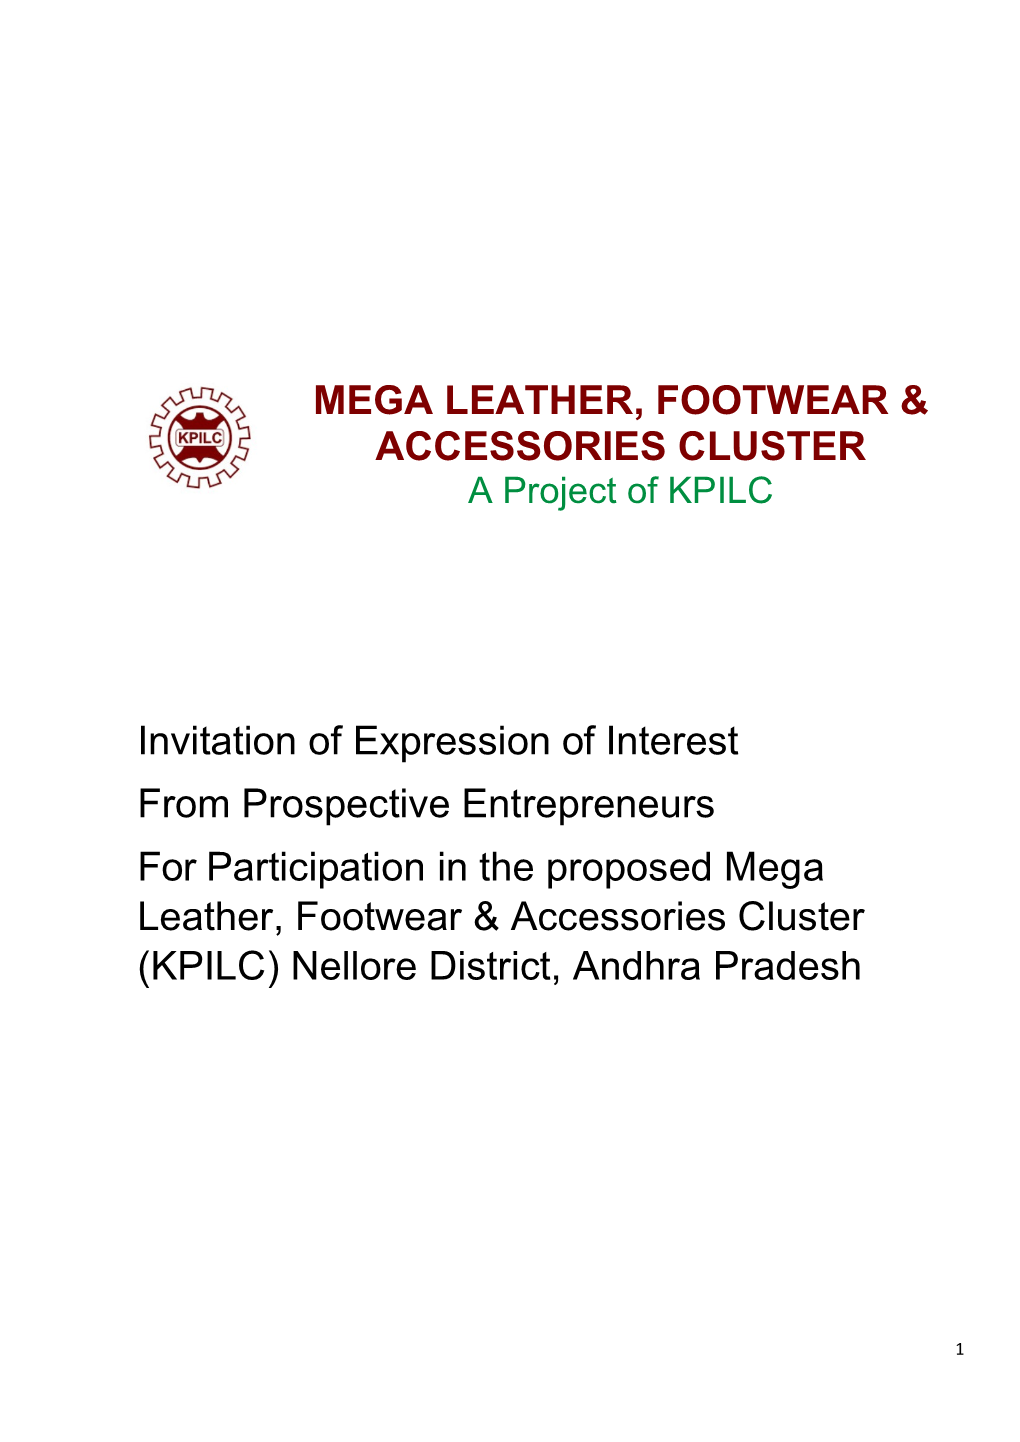 Mega Leather, Footwear & Accessories Cluster